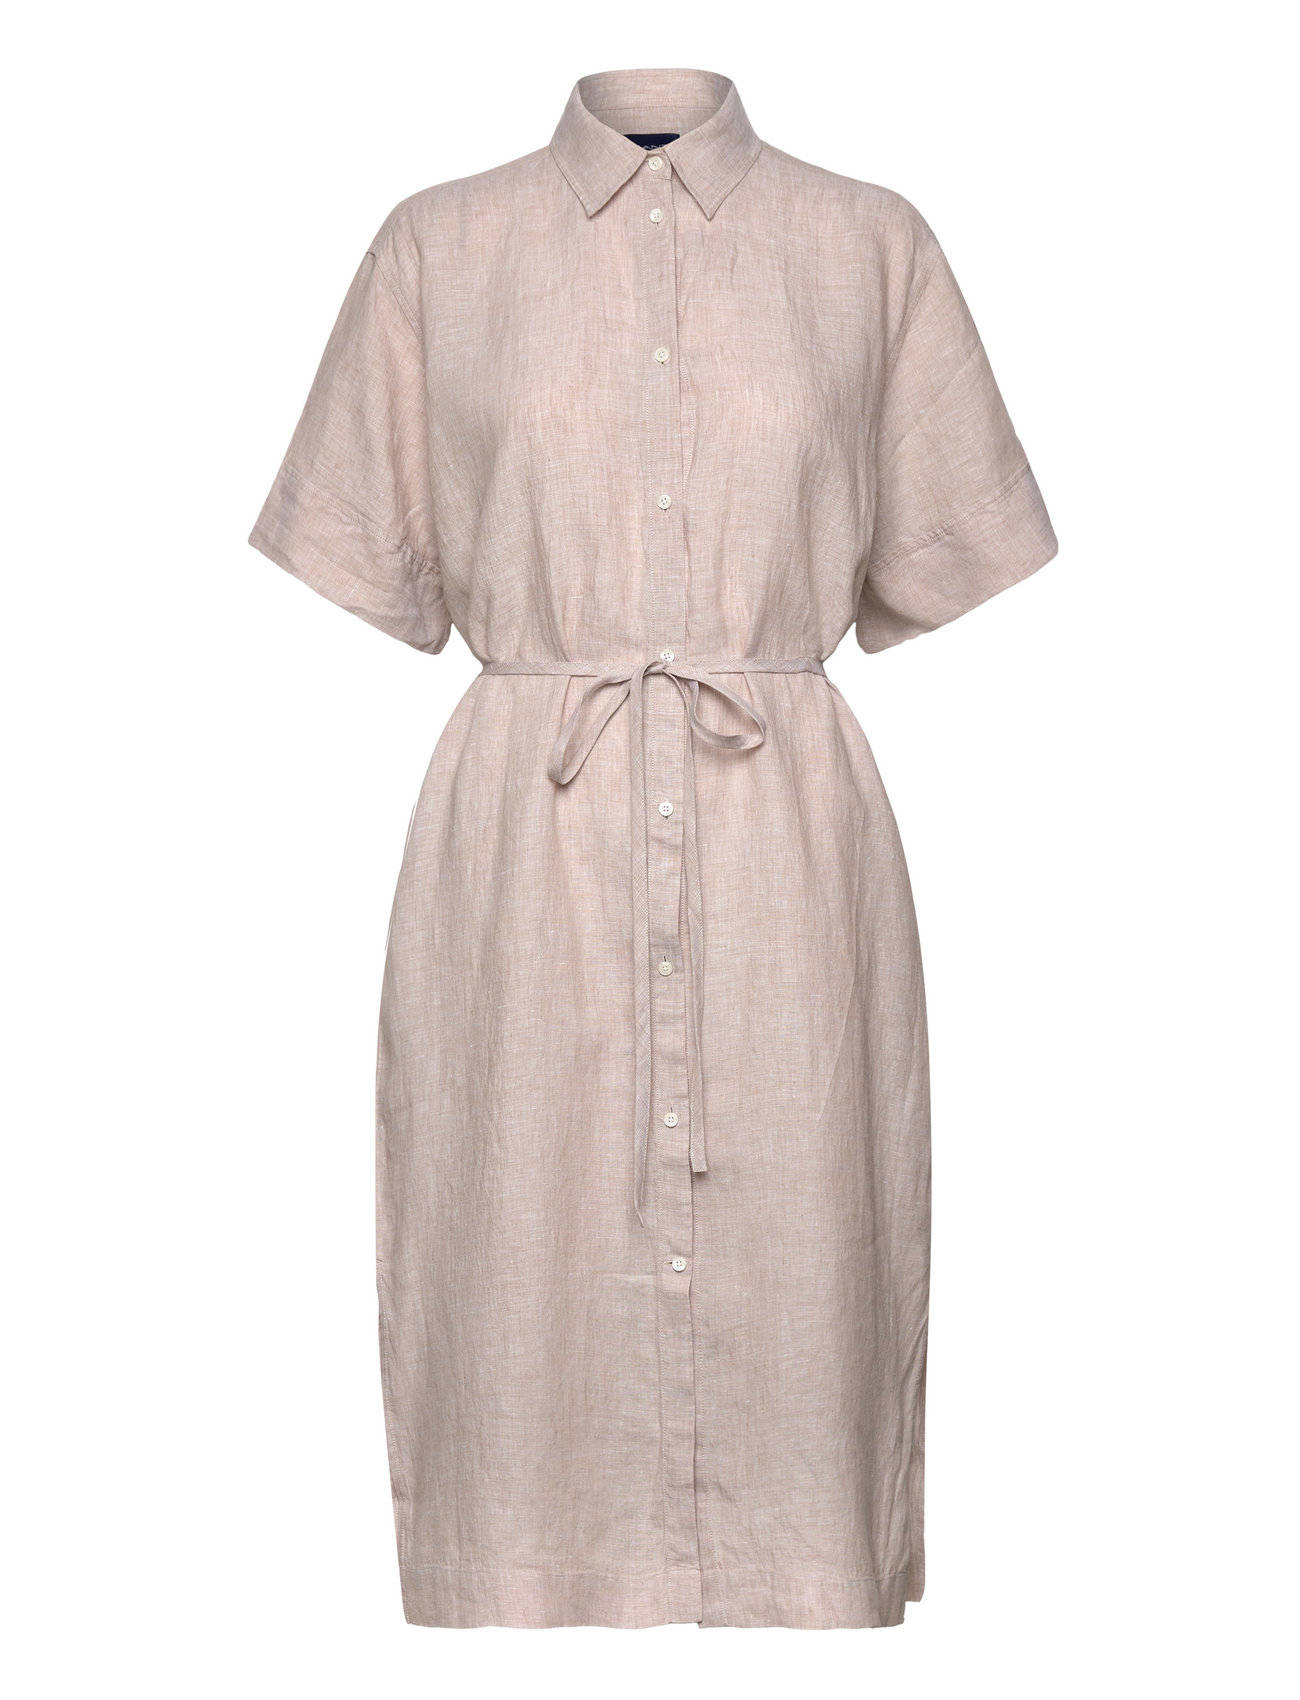 GANT Light Grey Dahlia Print Flared Short Sleeves Dress Size EU 44 UK 16 US  14